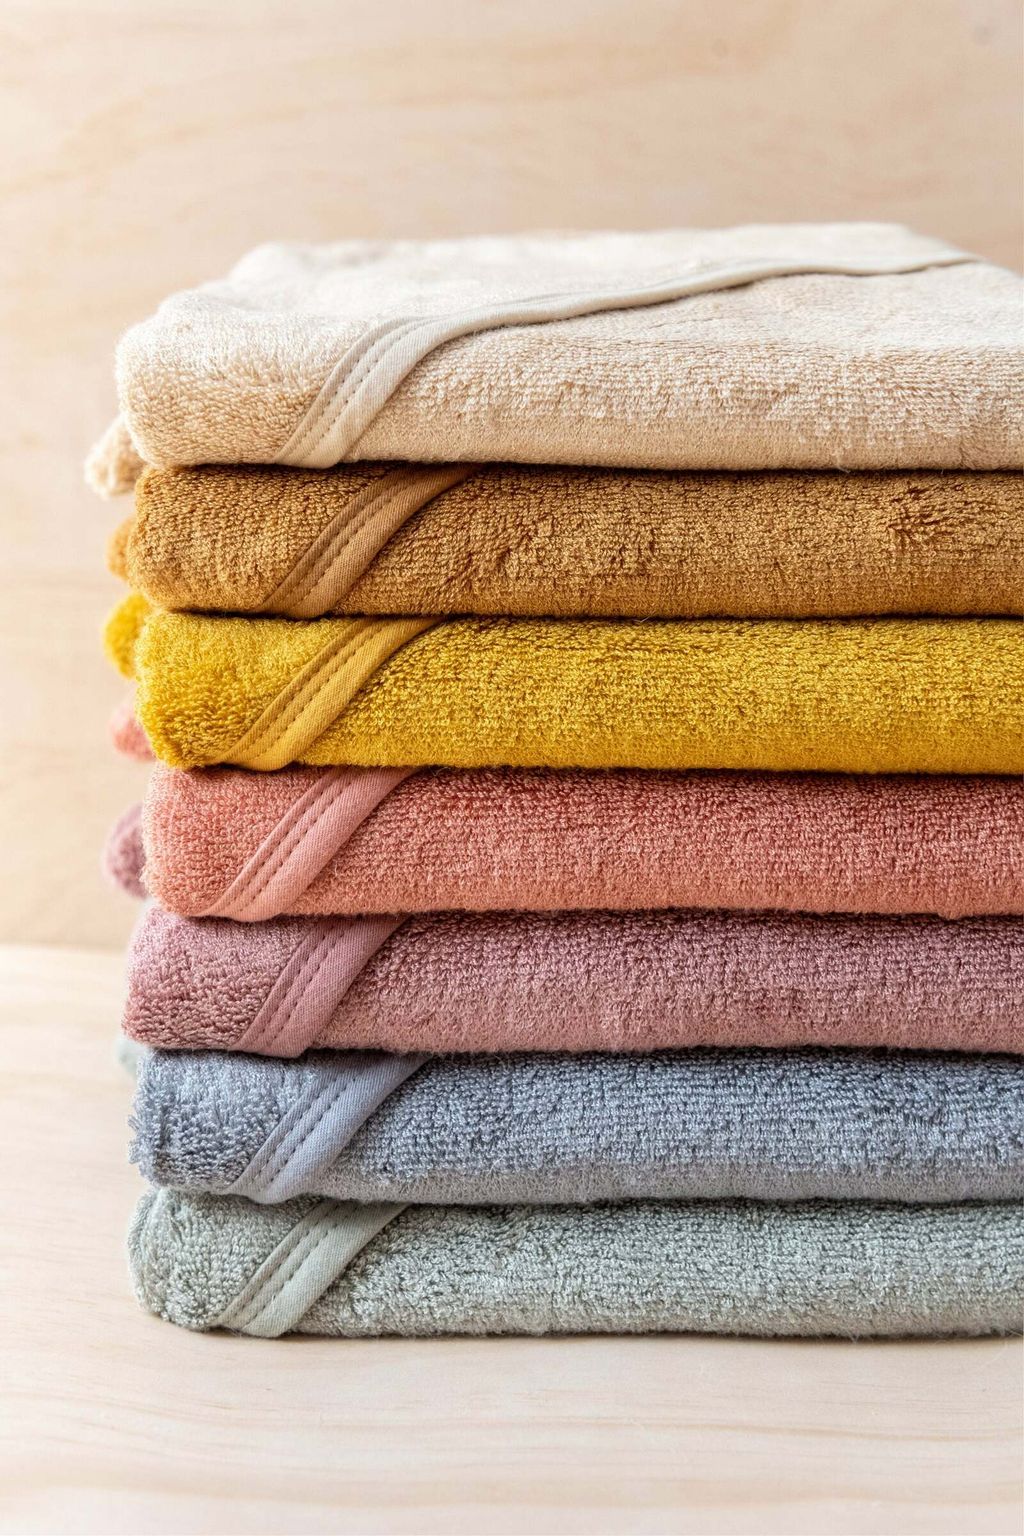 hooded-towel-cloud-cloths-towels-kiin-baby-228673.jpg